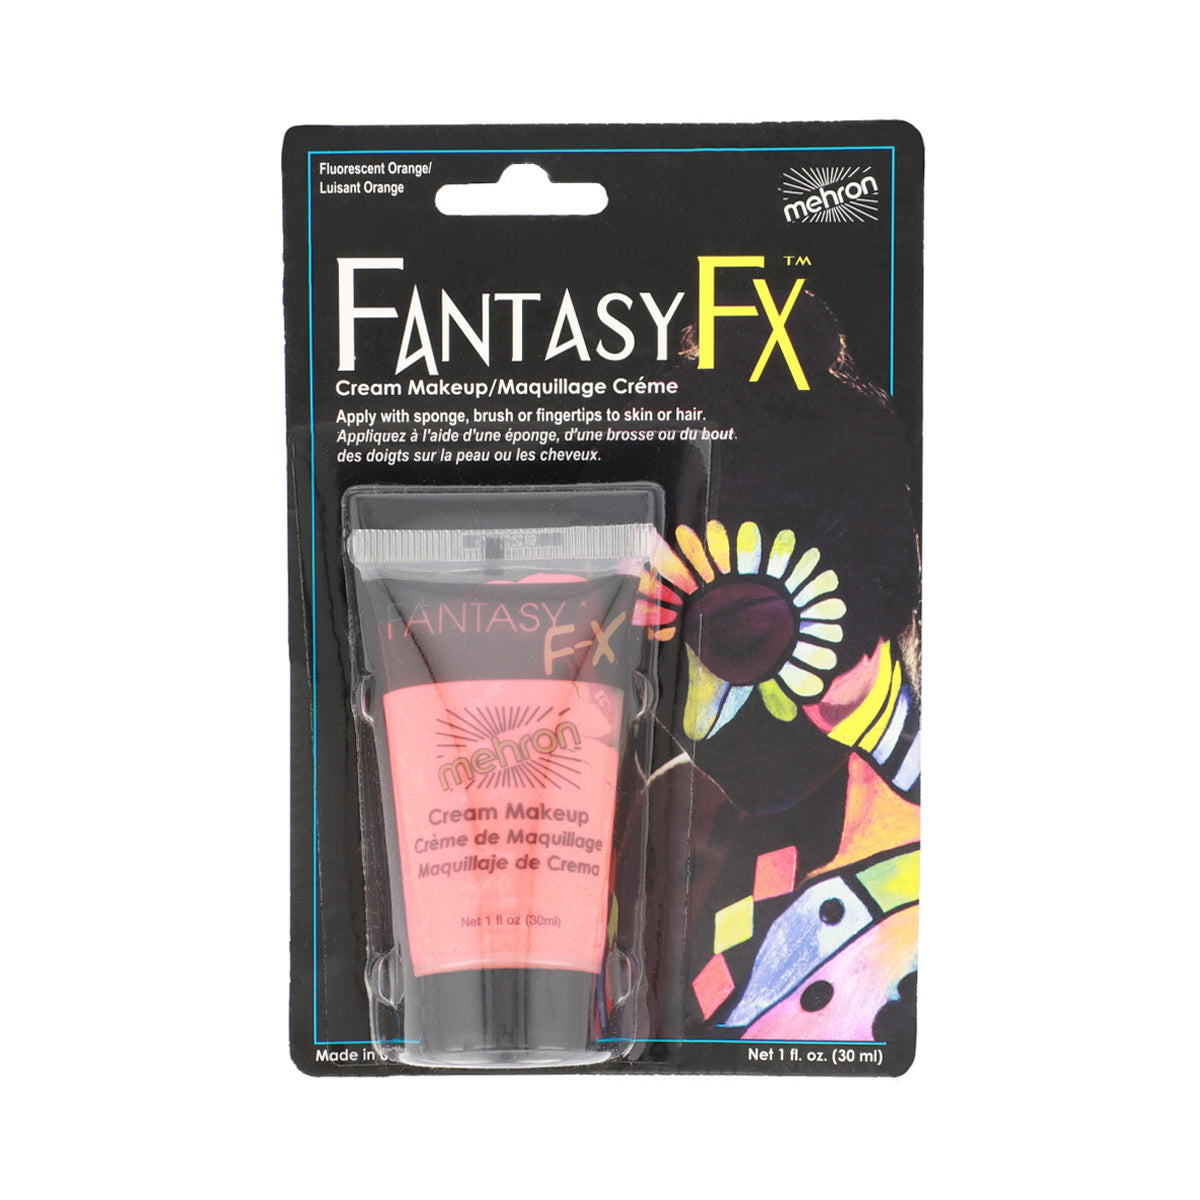 Fantasy FX Makeup - Naranja Fluorescente